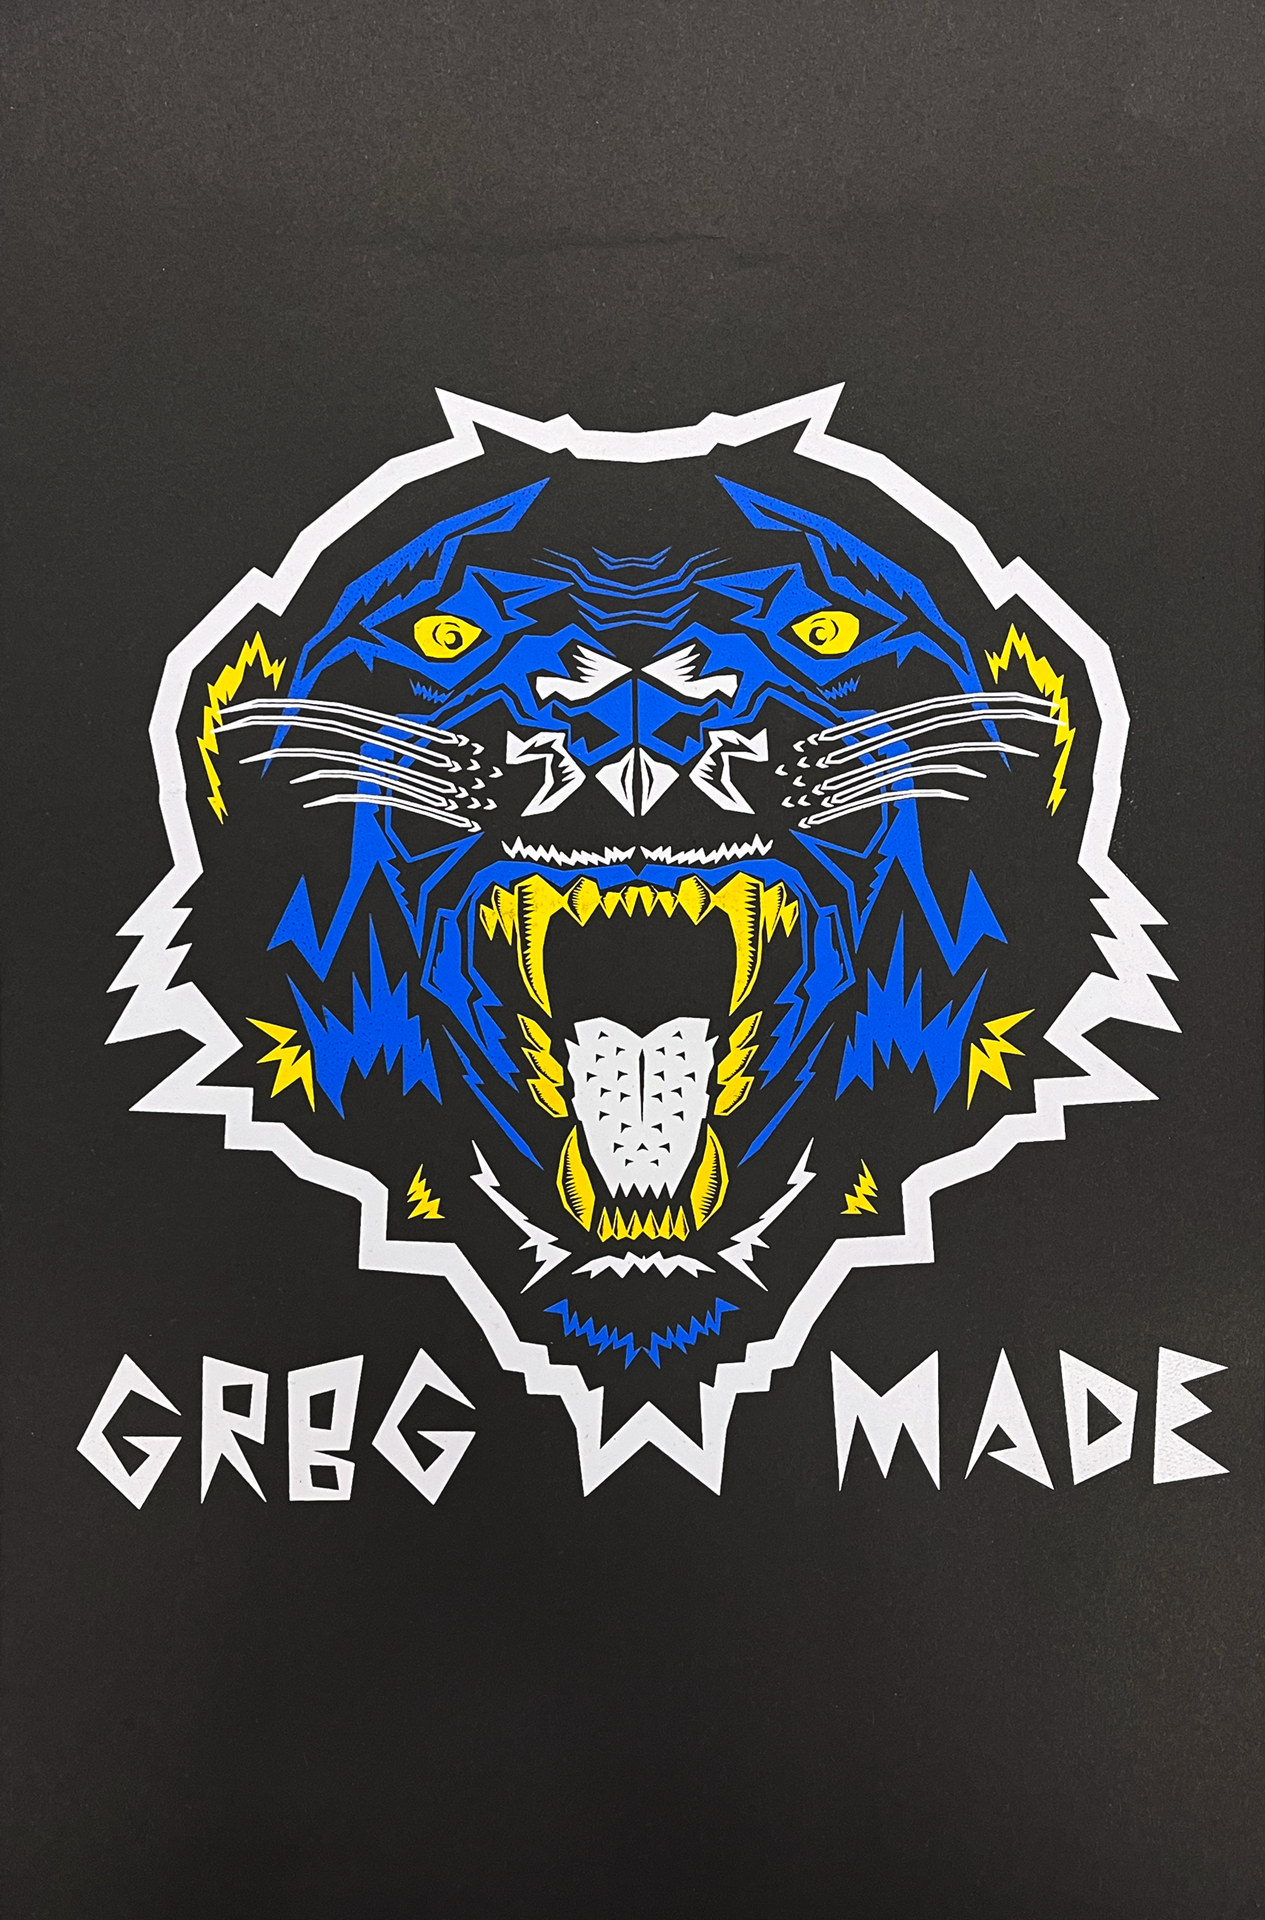 GRBG MADE - Jaguar